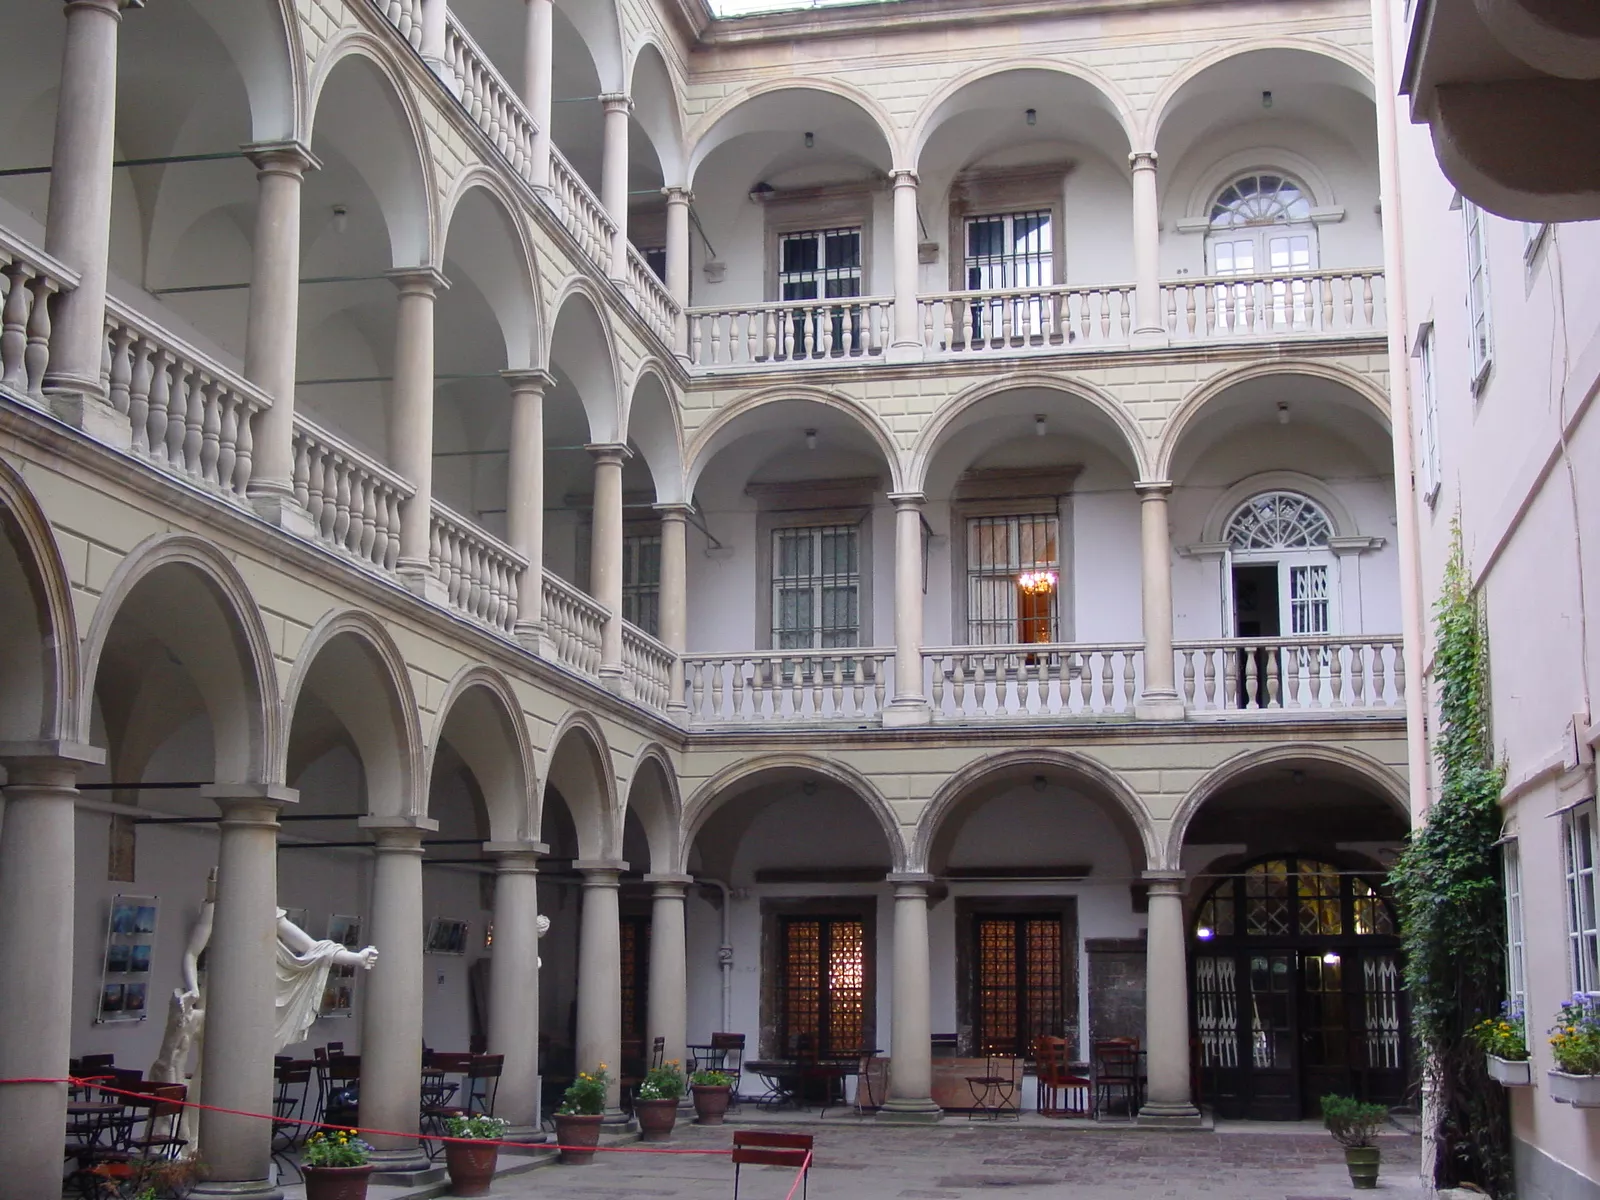 Italian Courtyard in Ukraine, Europe | Architecture - Rated 3.5